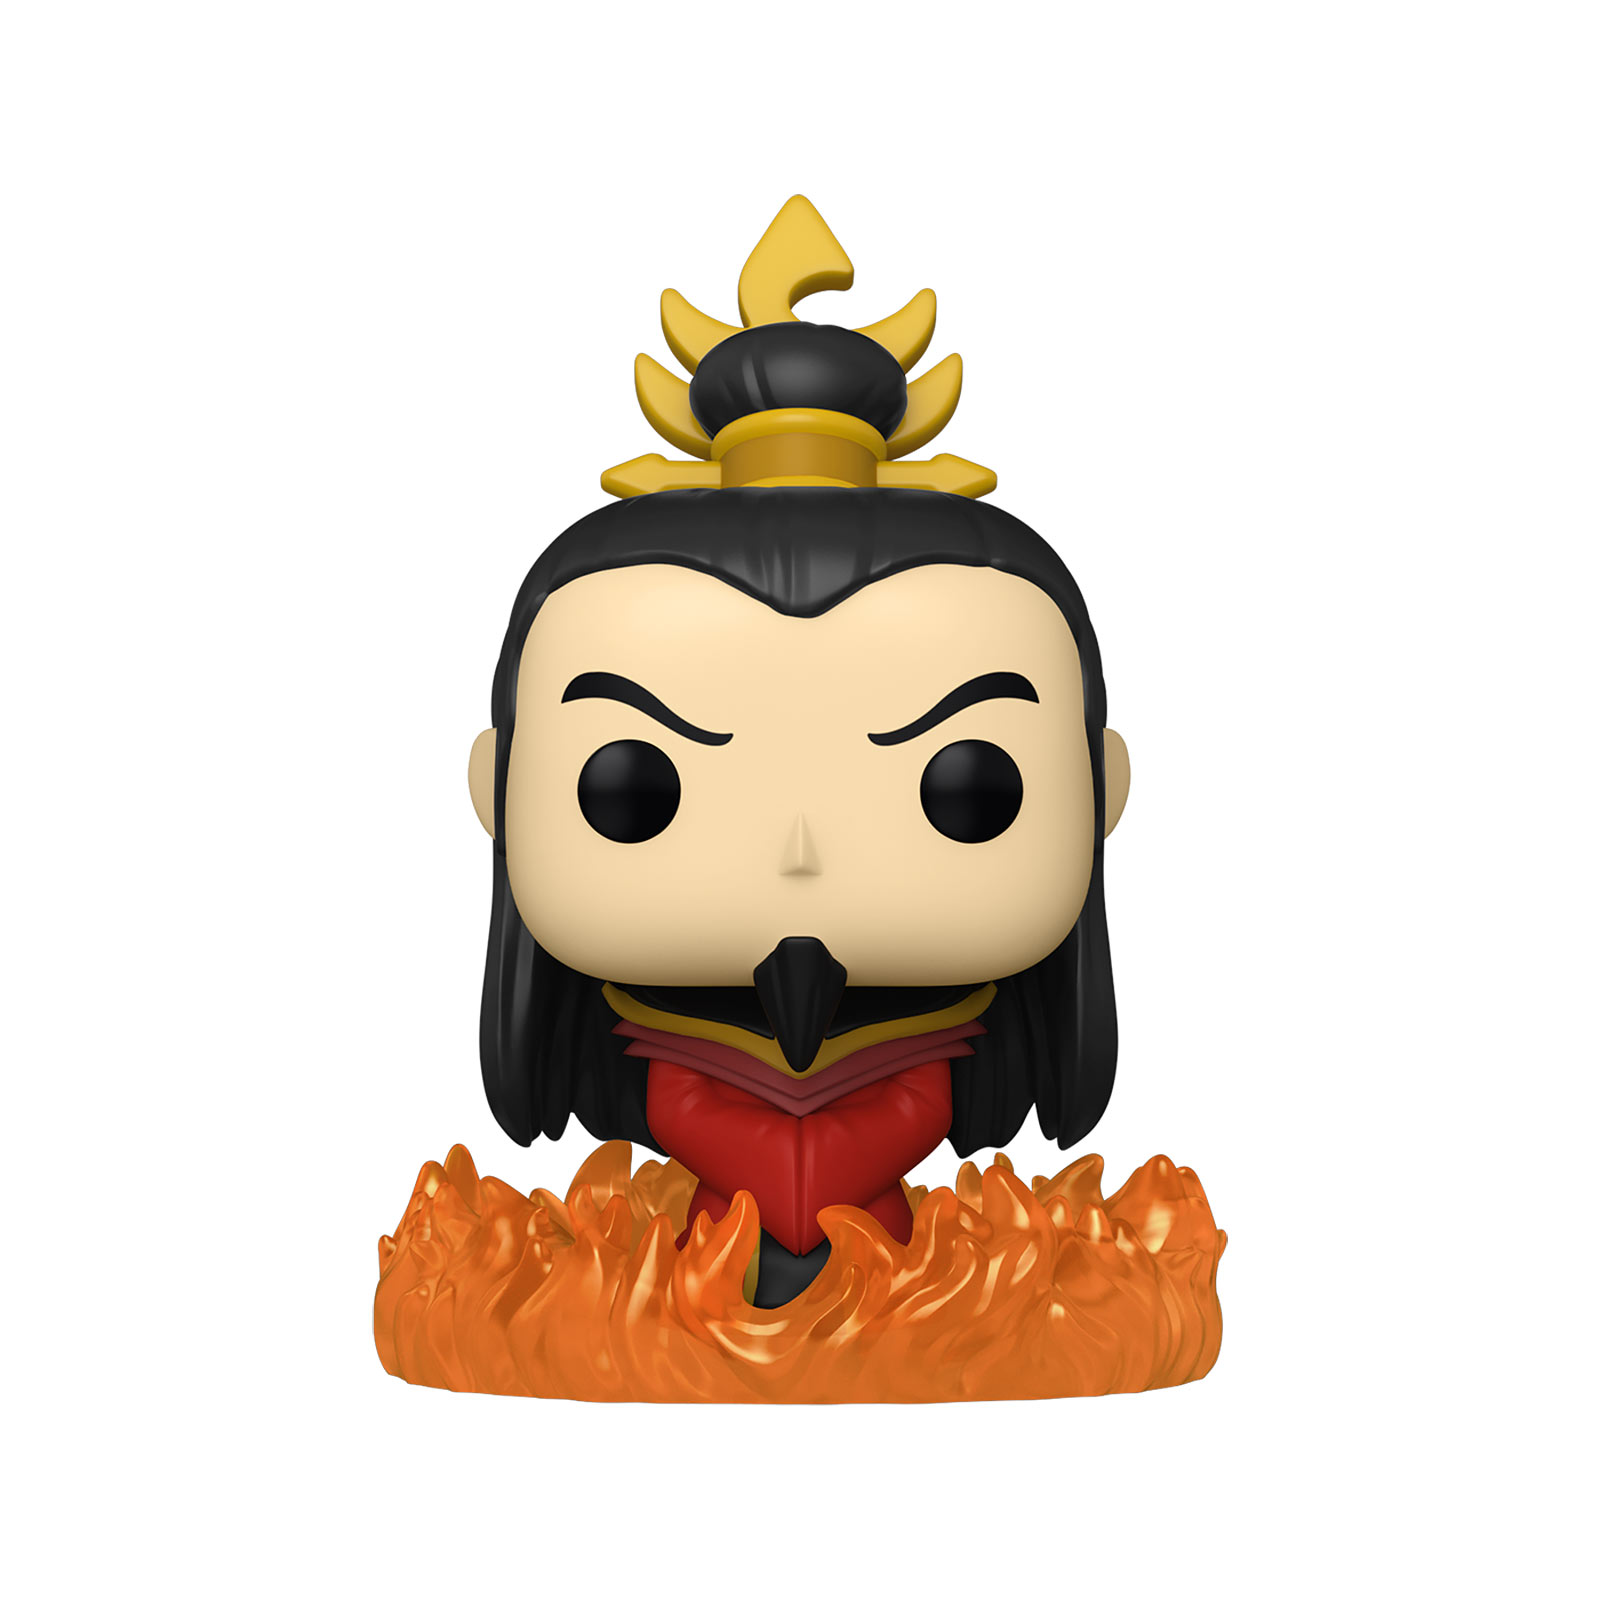 Avatar - Fire Lord Ozai Funko Pop Figurine